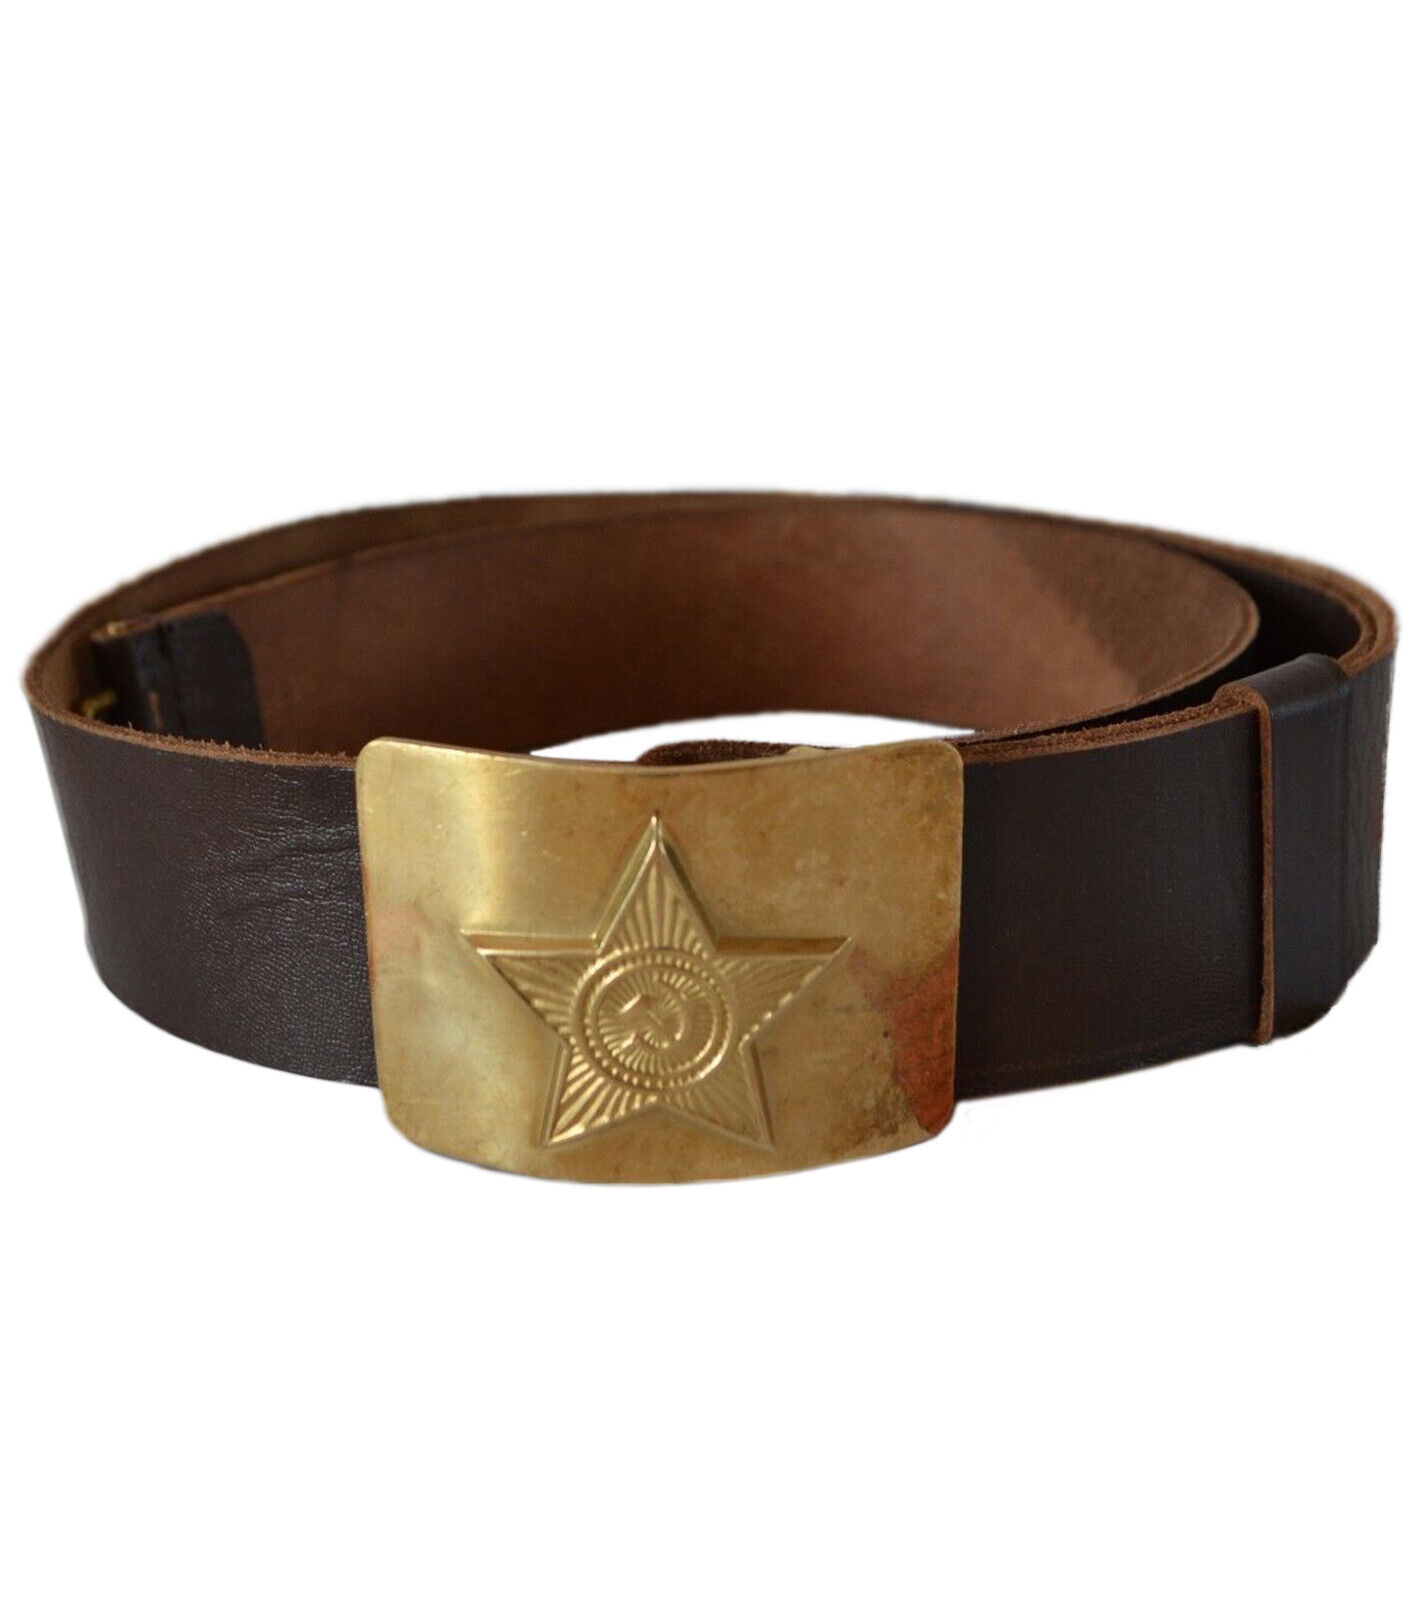 Ussr brown leather belt adjustable brass buckle authentic soviet surplus vintage